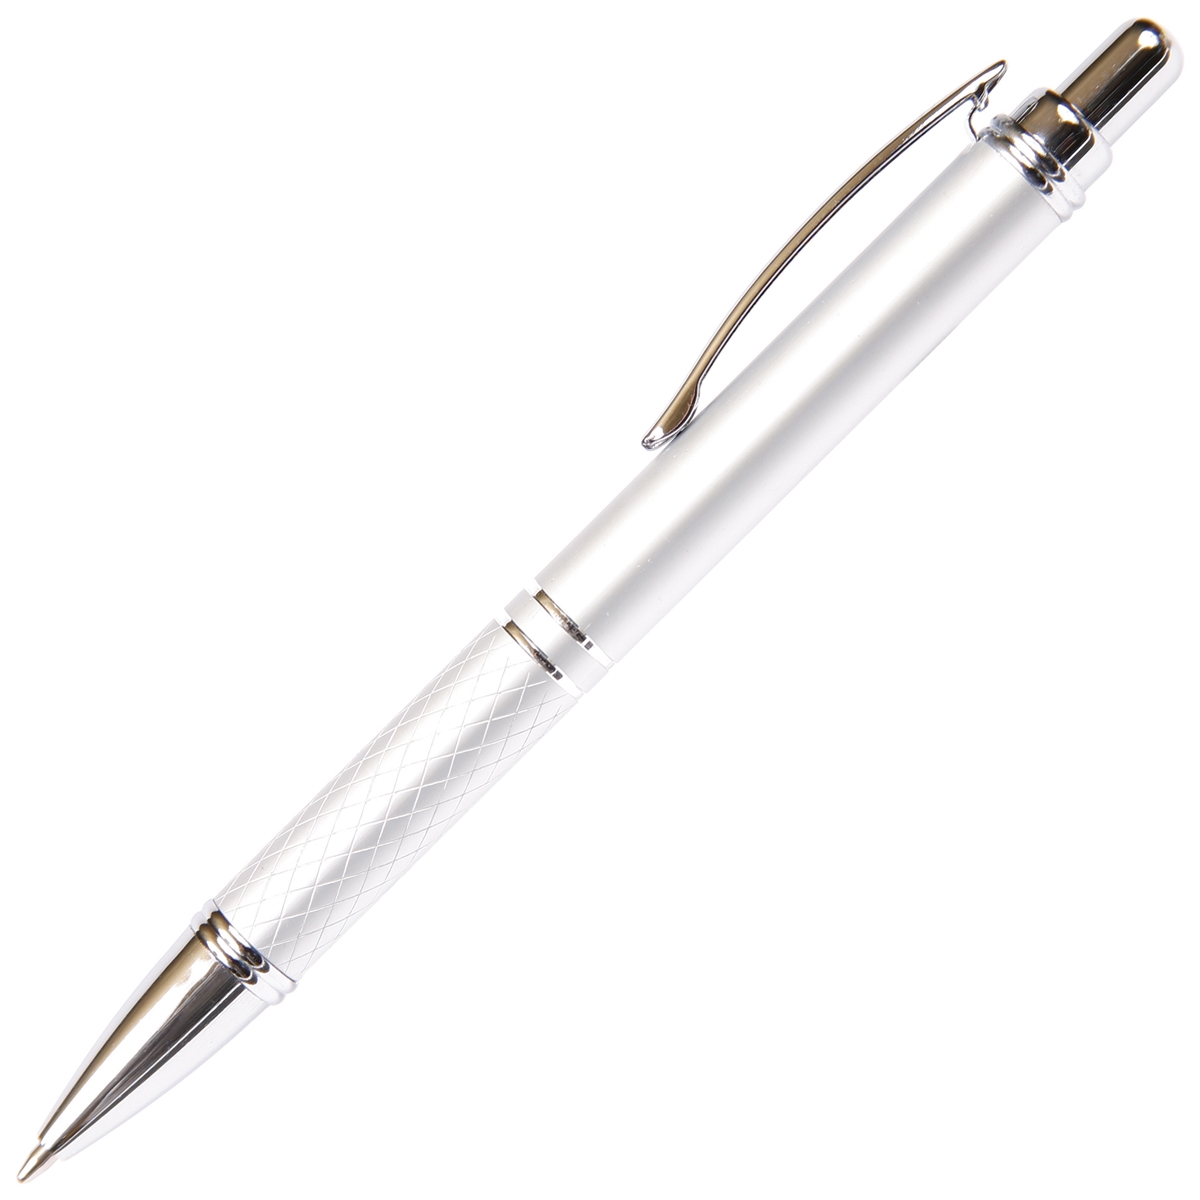 A204 - Silver Ball Point Pen by Lanier Pens